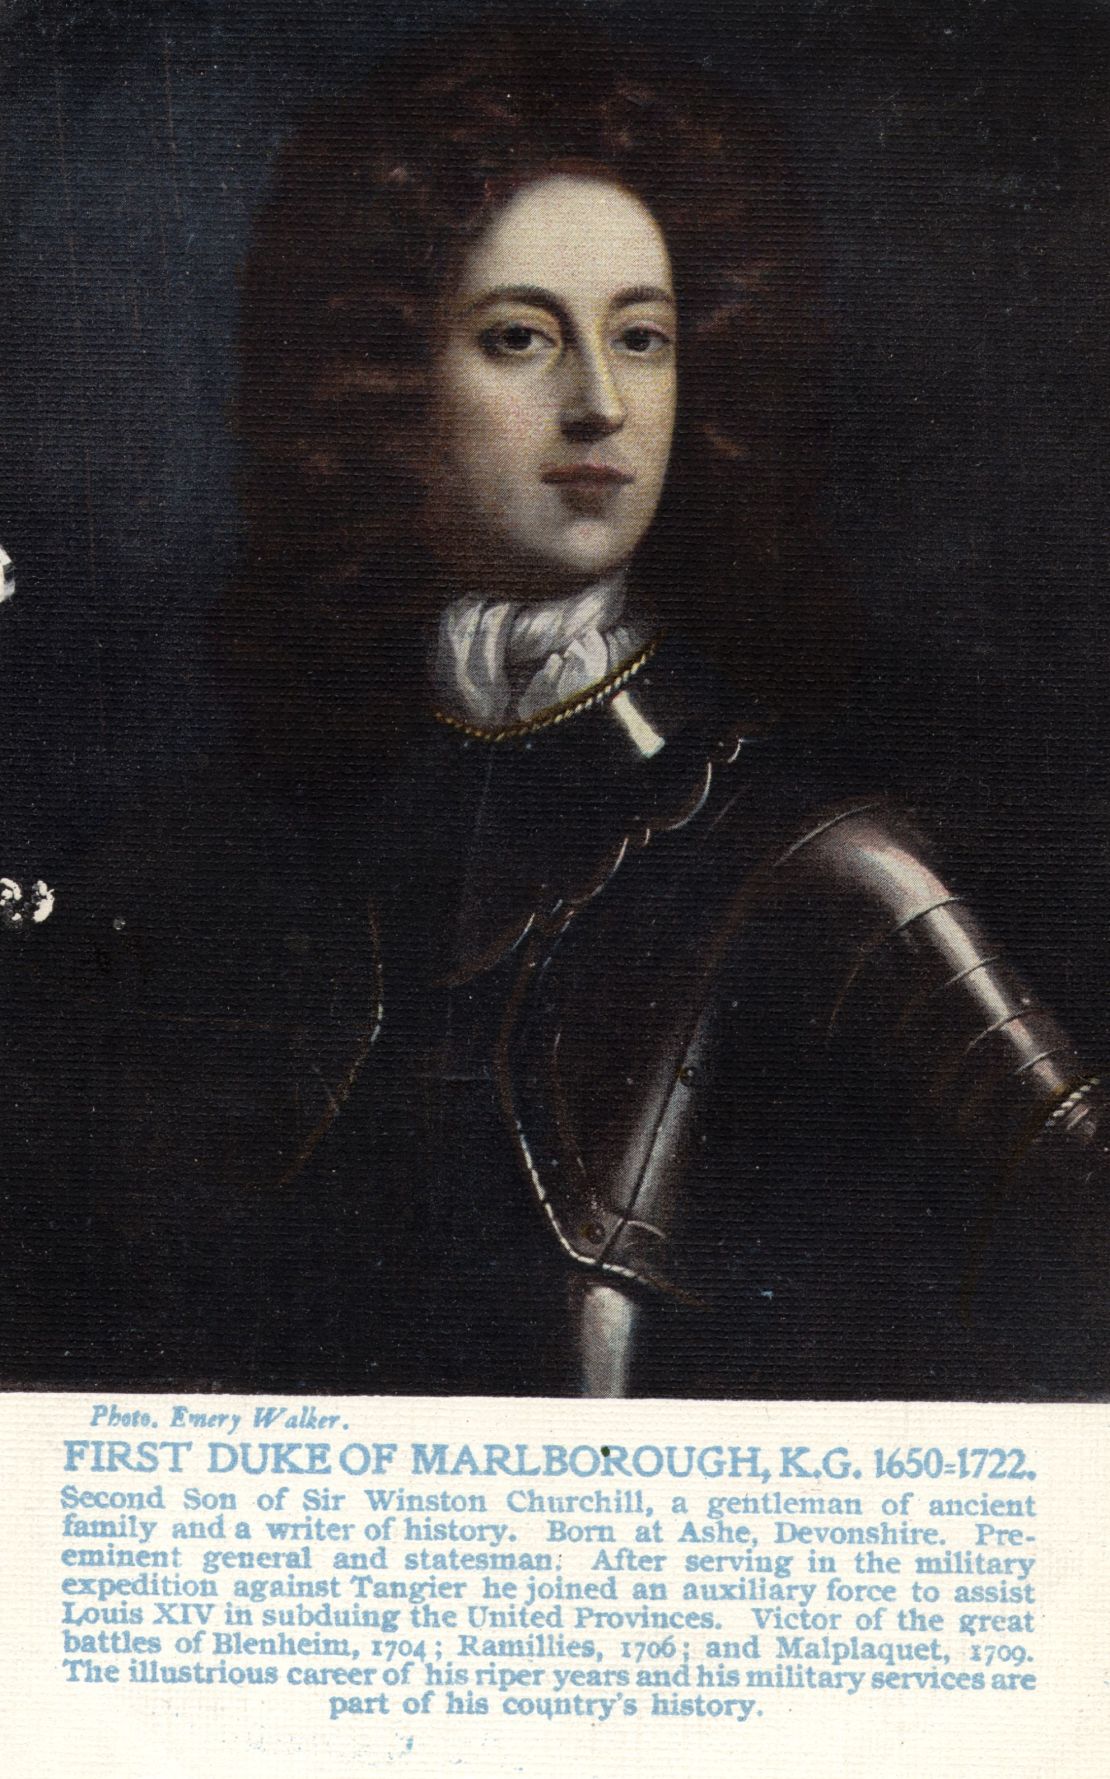 John Churchill, 1st Duke of Marlborough.